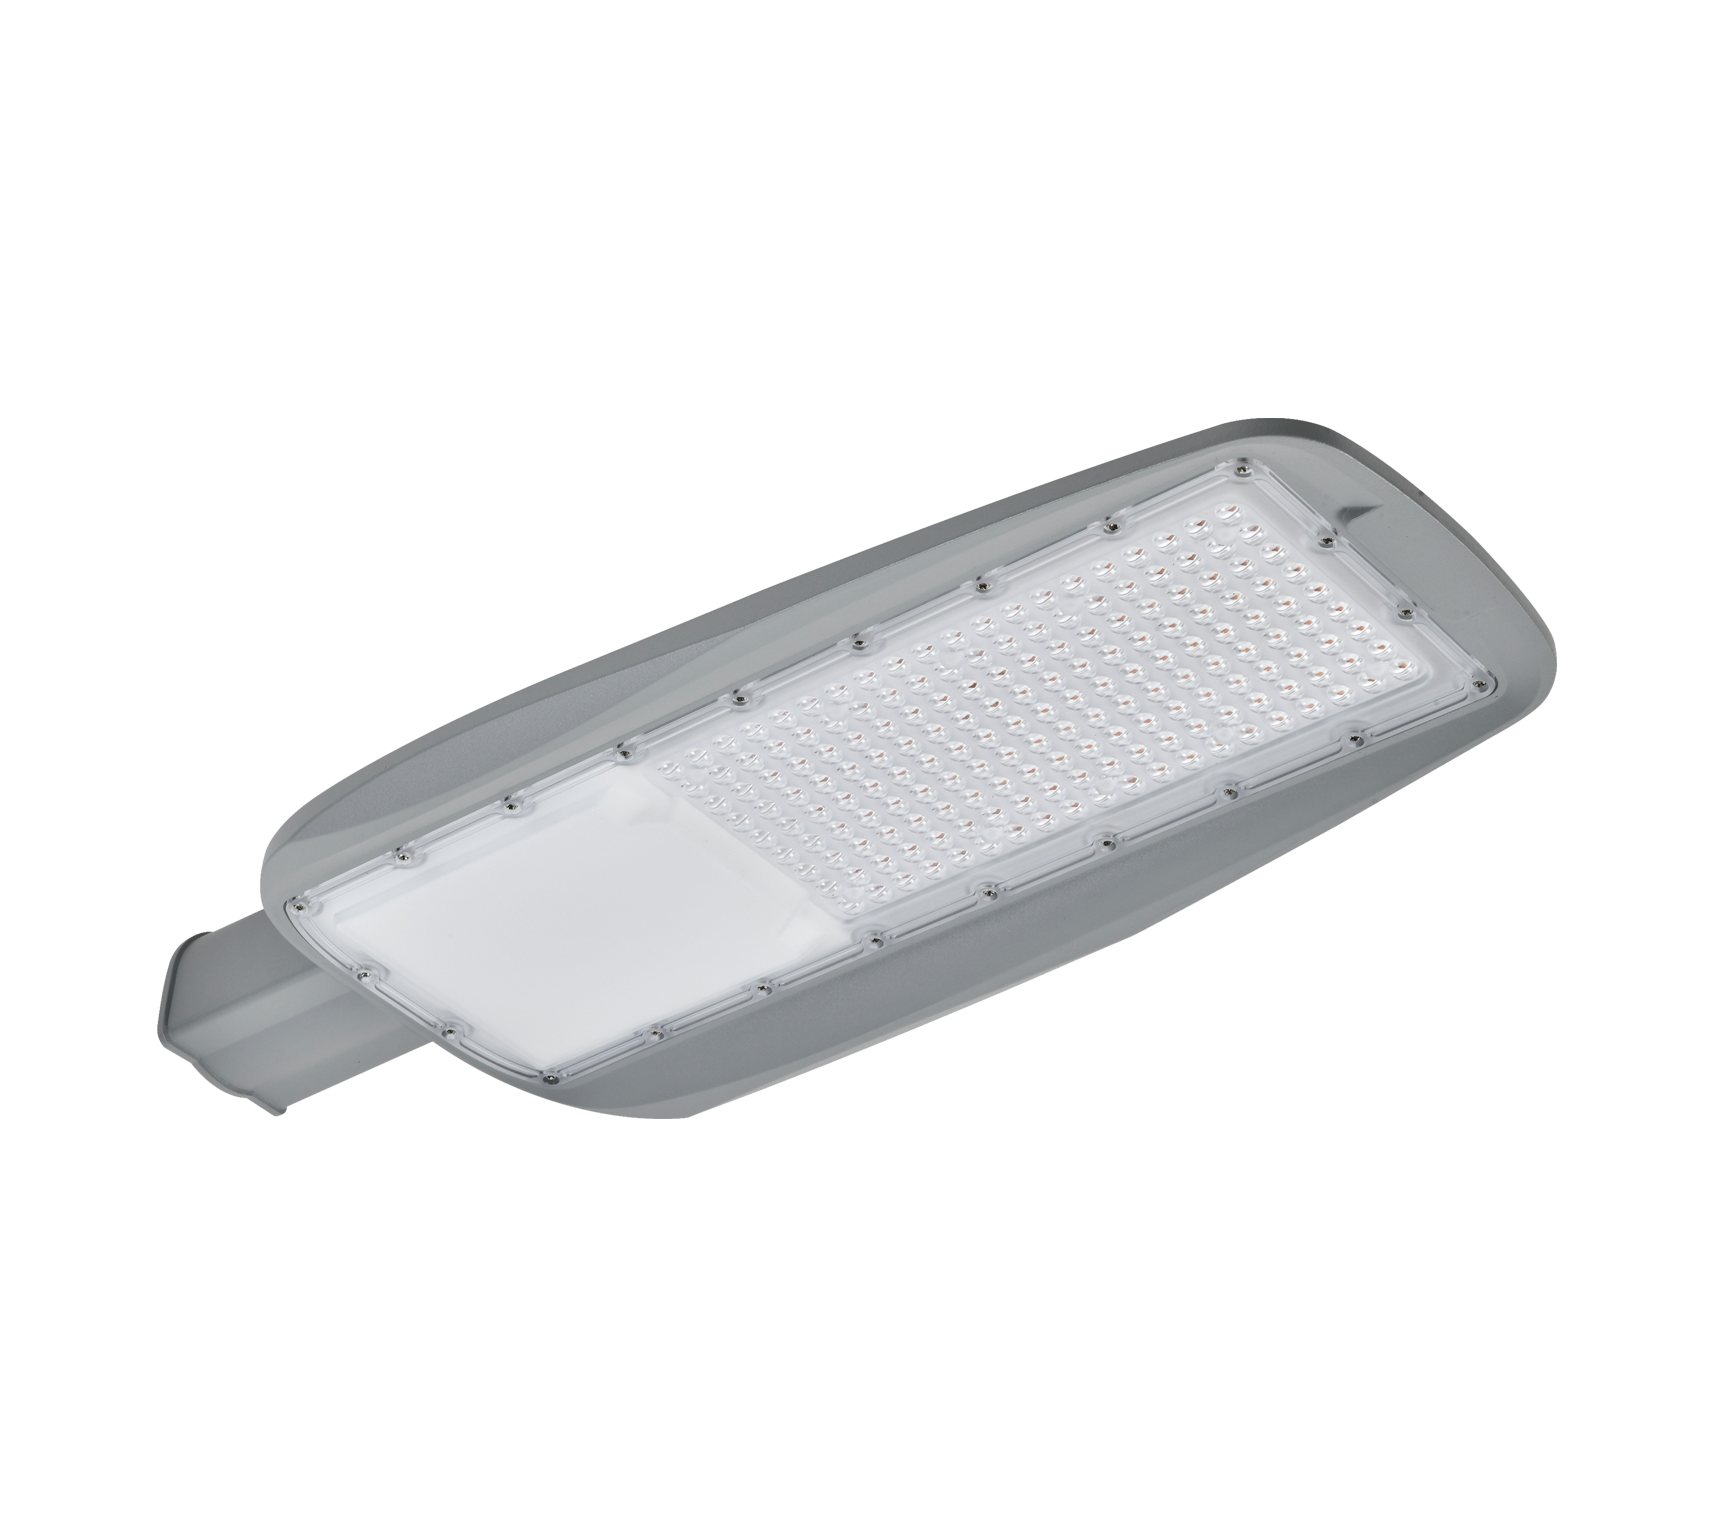 LED-PETALA-180-65-3C <span>(caixa)</span><br/>